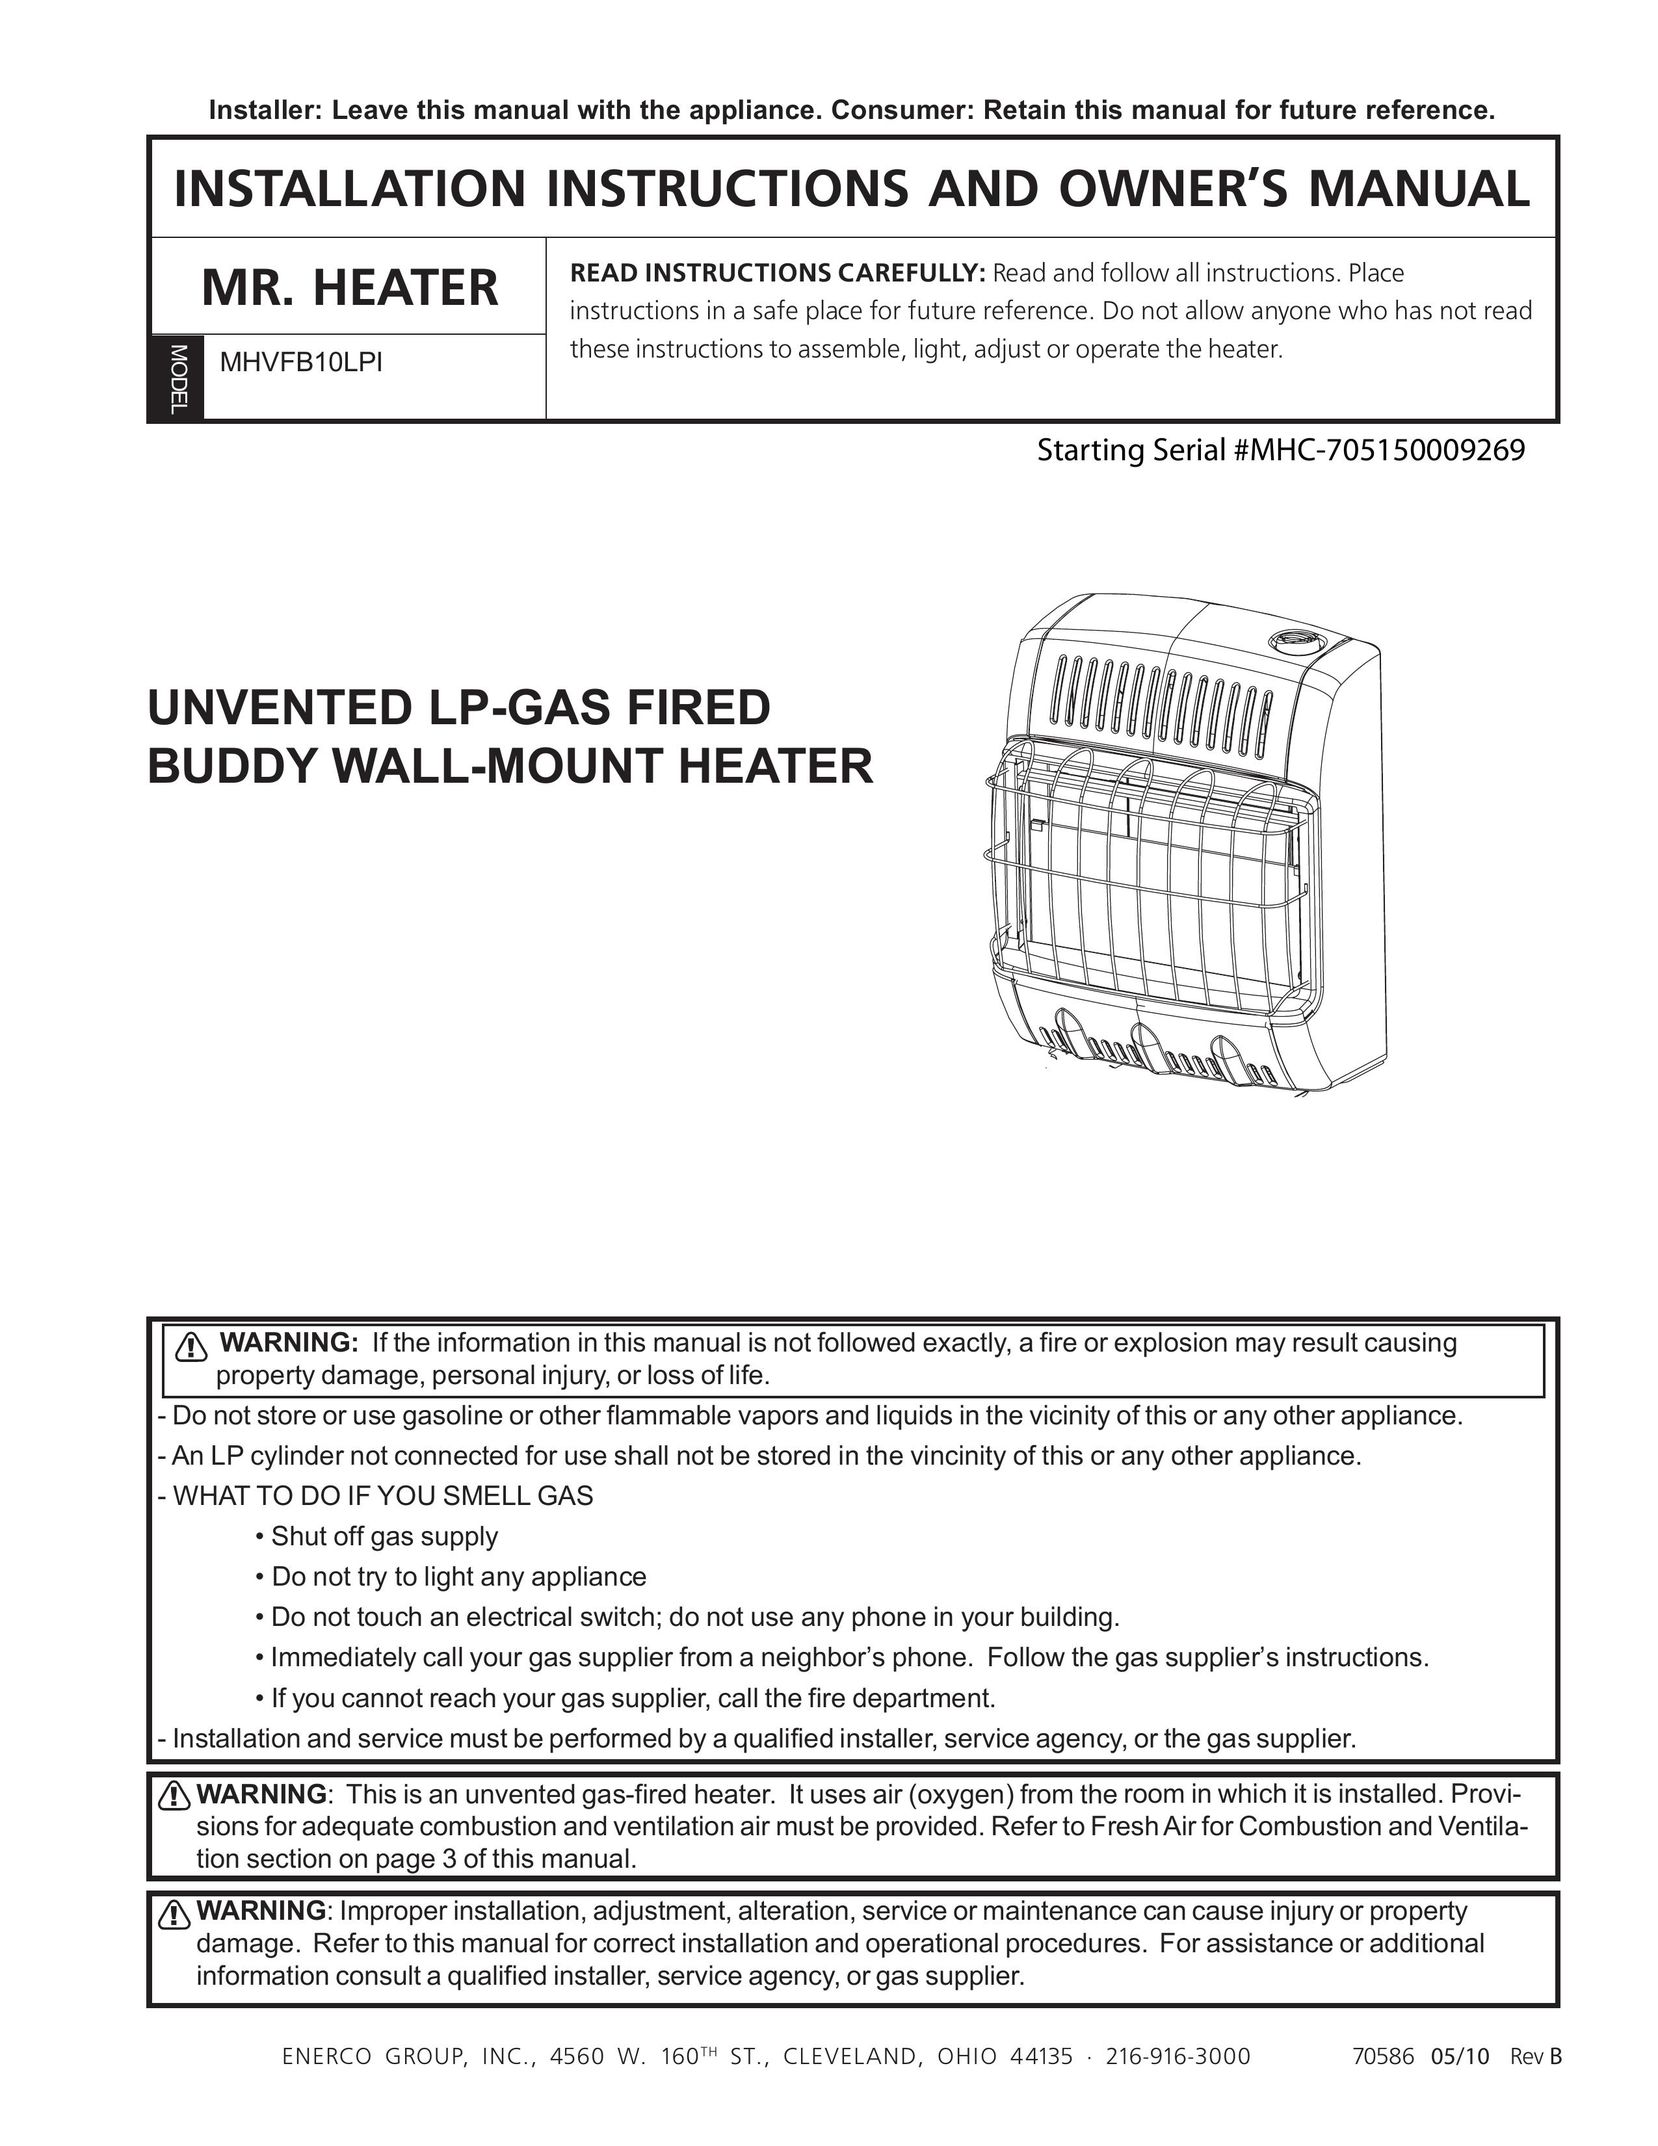 Enerco MHVFB10LPI Gas Heater User Manual